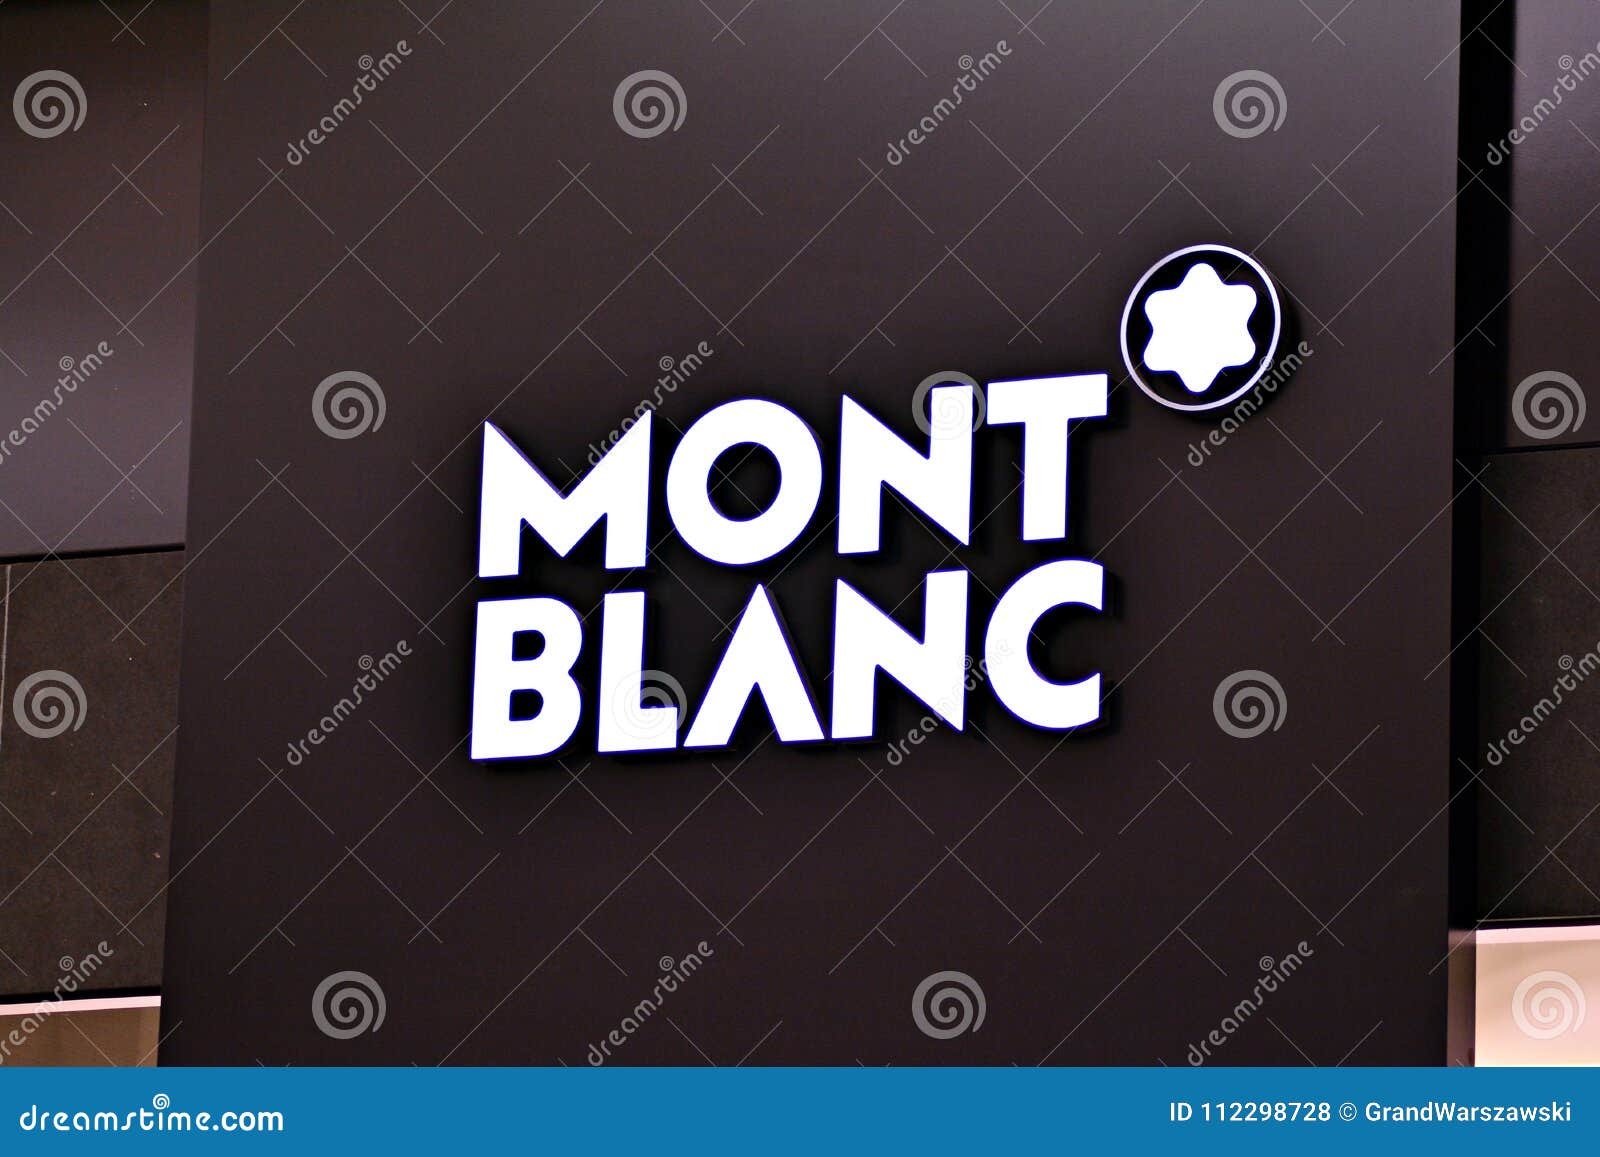 Montblanc Bag Stock Photos - Free & Royalty-Free Stock Photos from